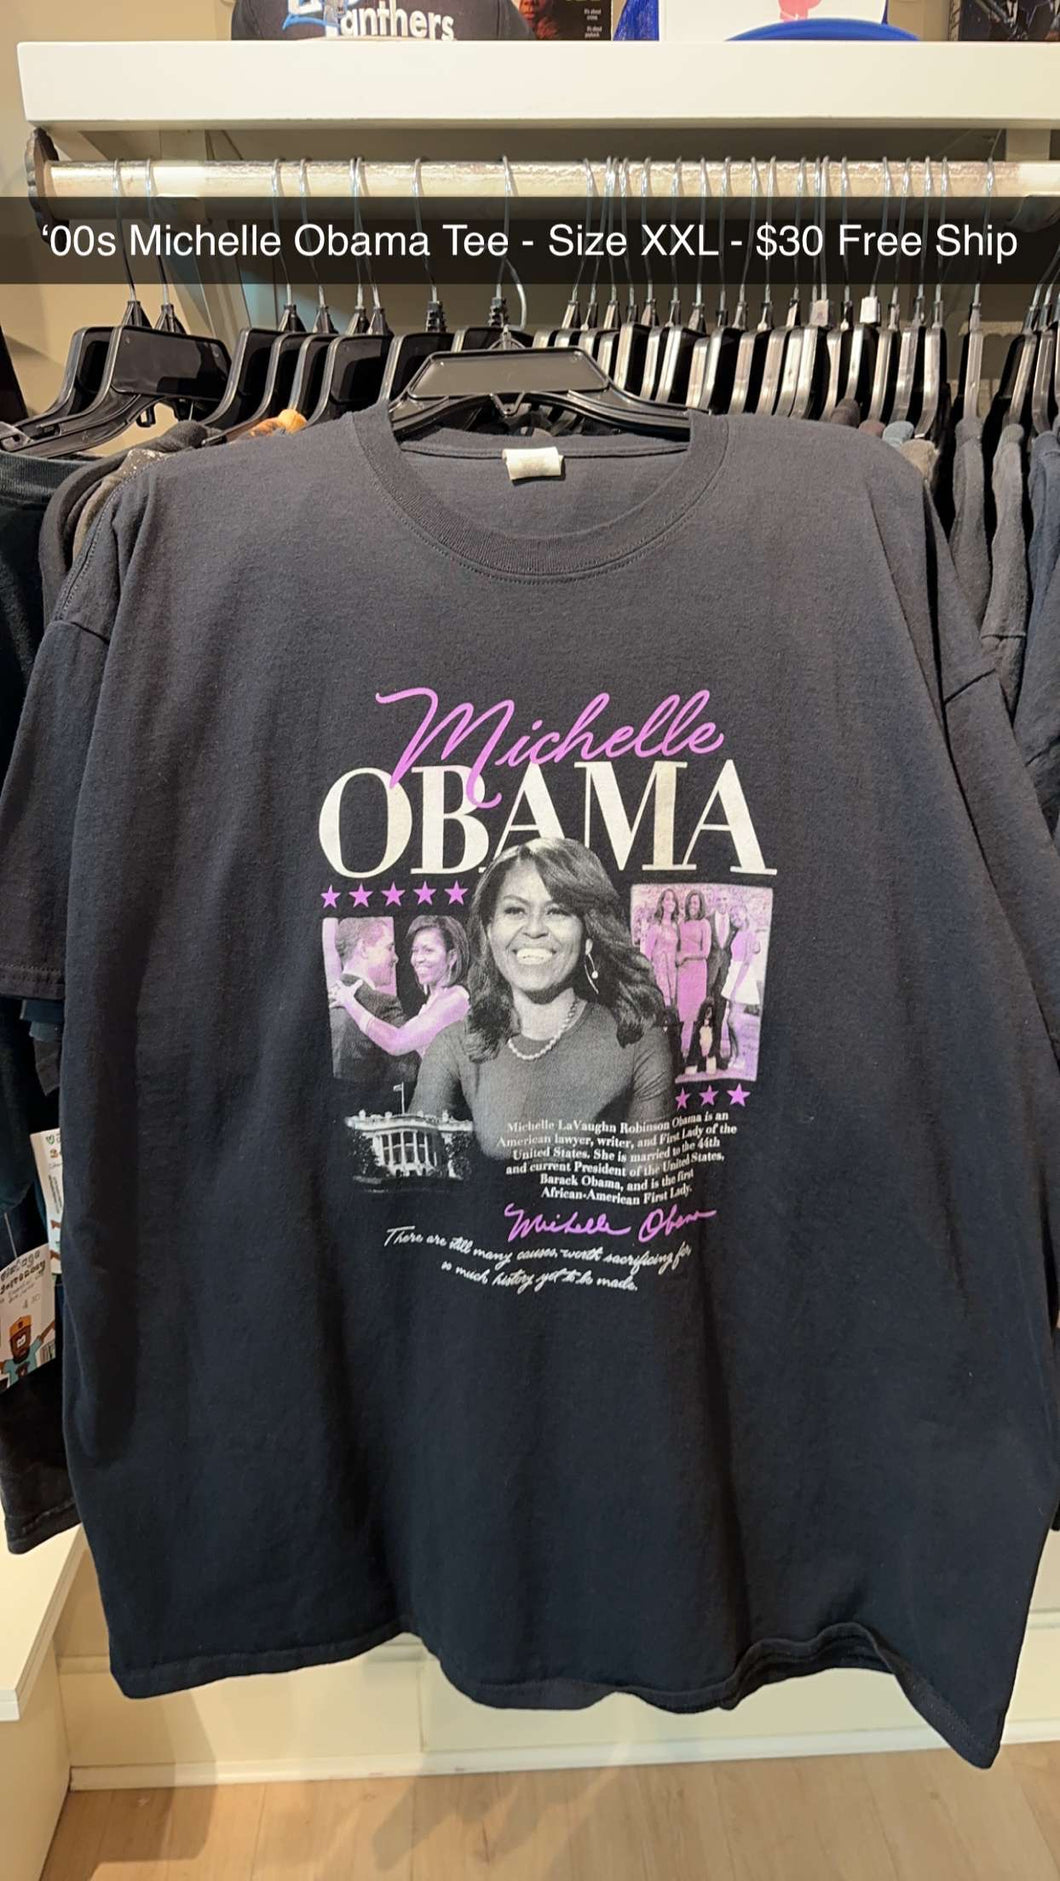 00s Michelle Obama Tee